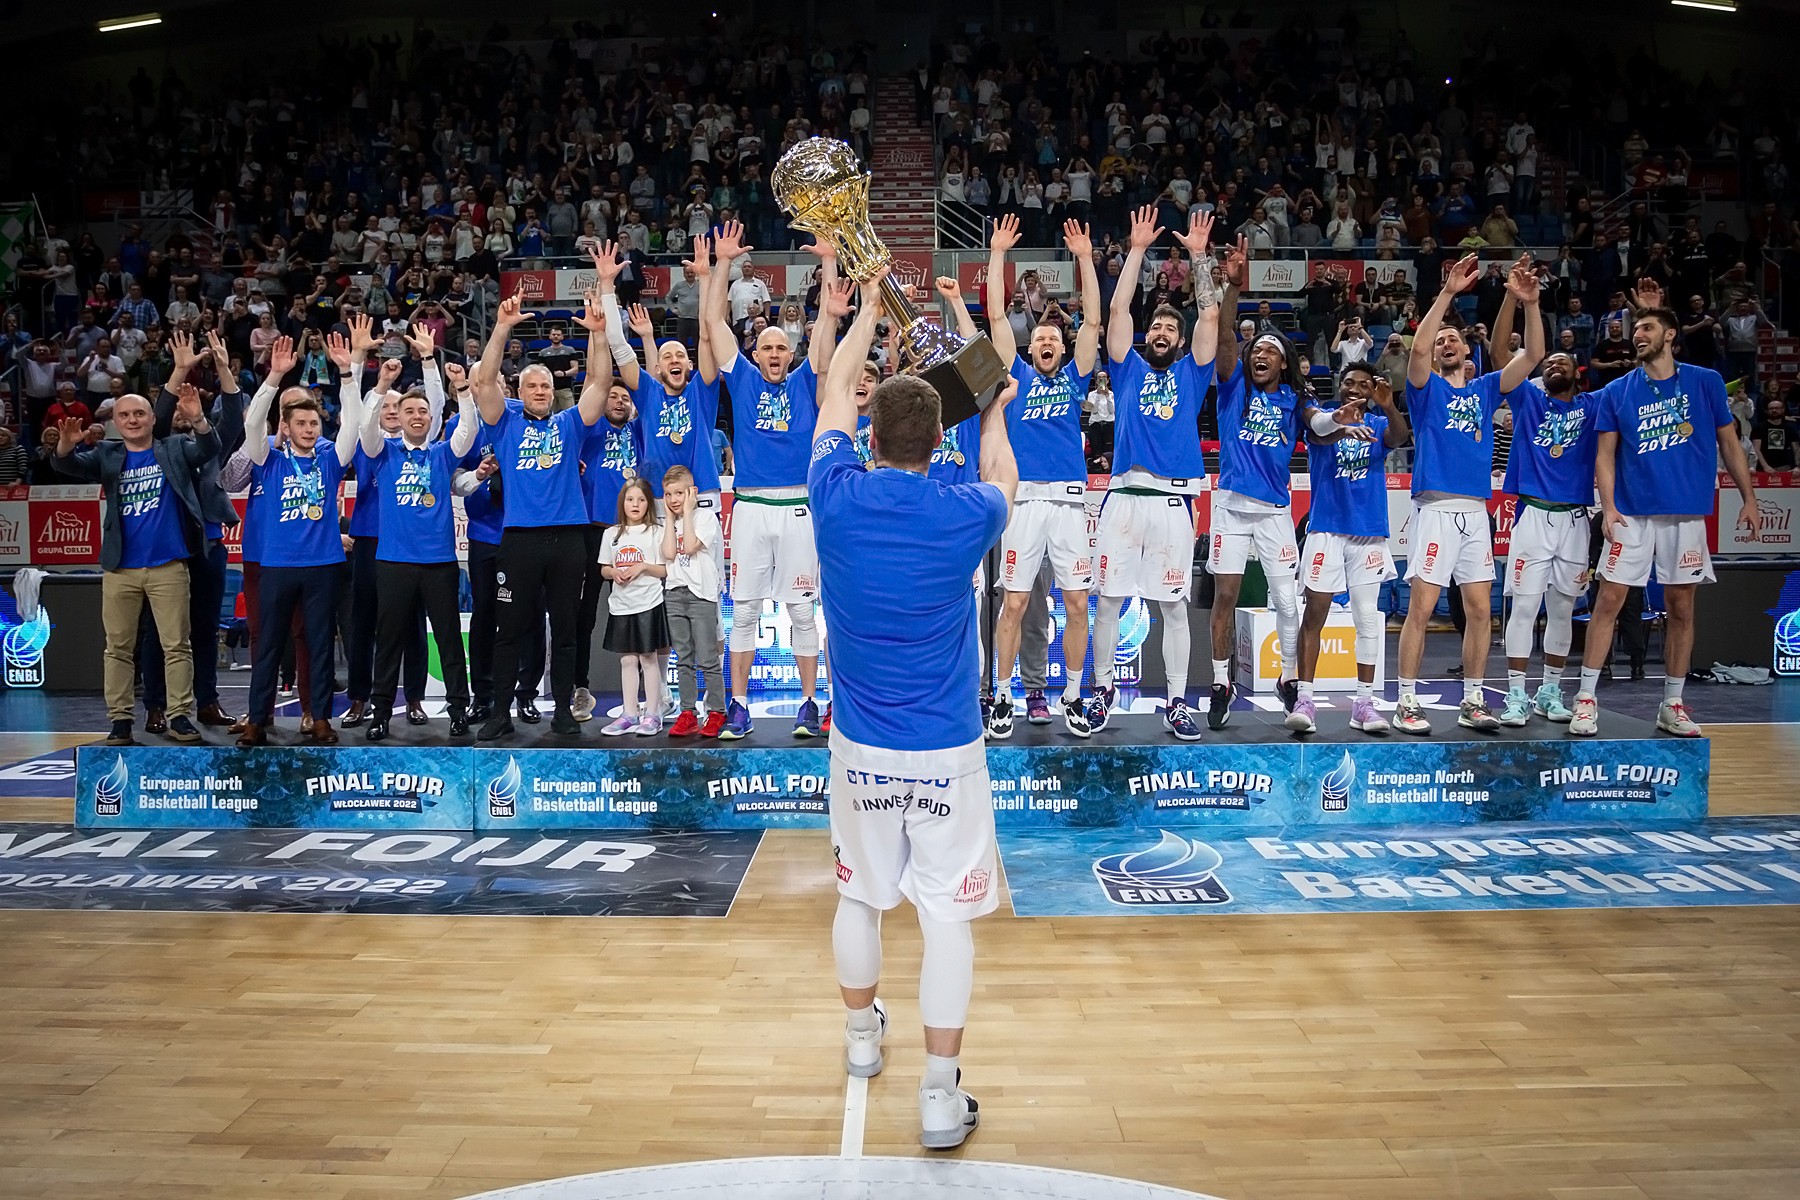 Historyczna chwila – Rottweilery wygrywają European North Basketball League!